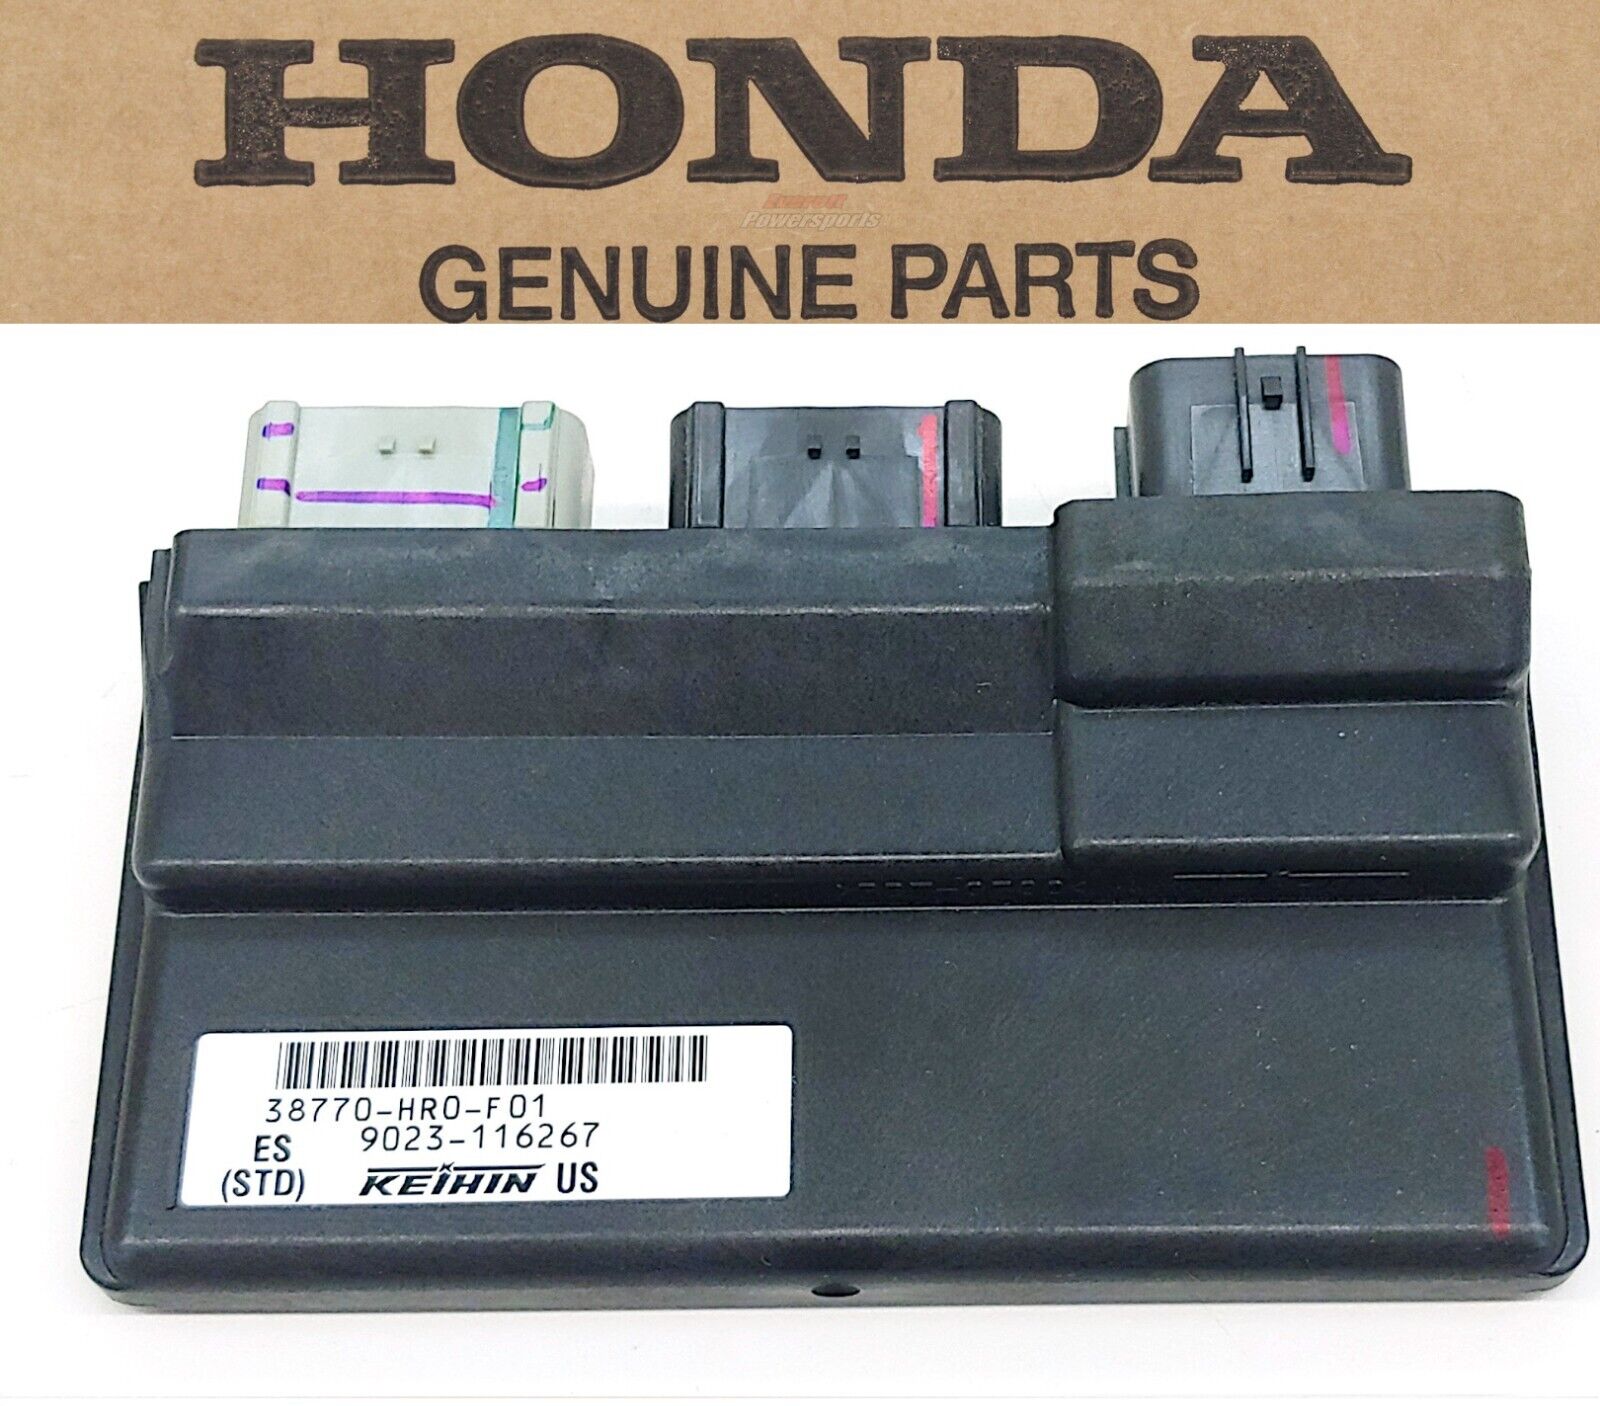 2013+Honda+Foreman+500+FE+Trx500+PGM+Fi+Unit+ECM+38770-hr0-f01 for